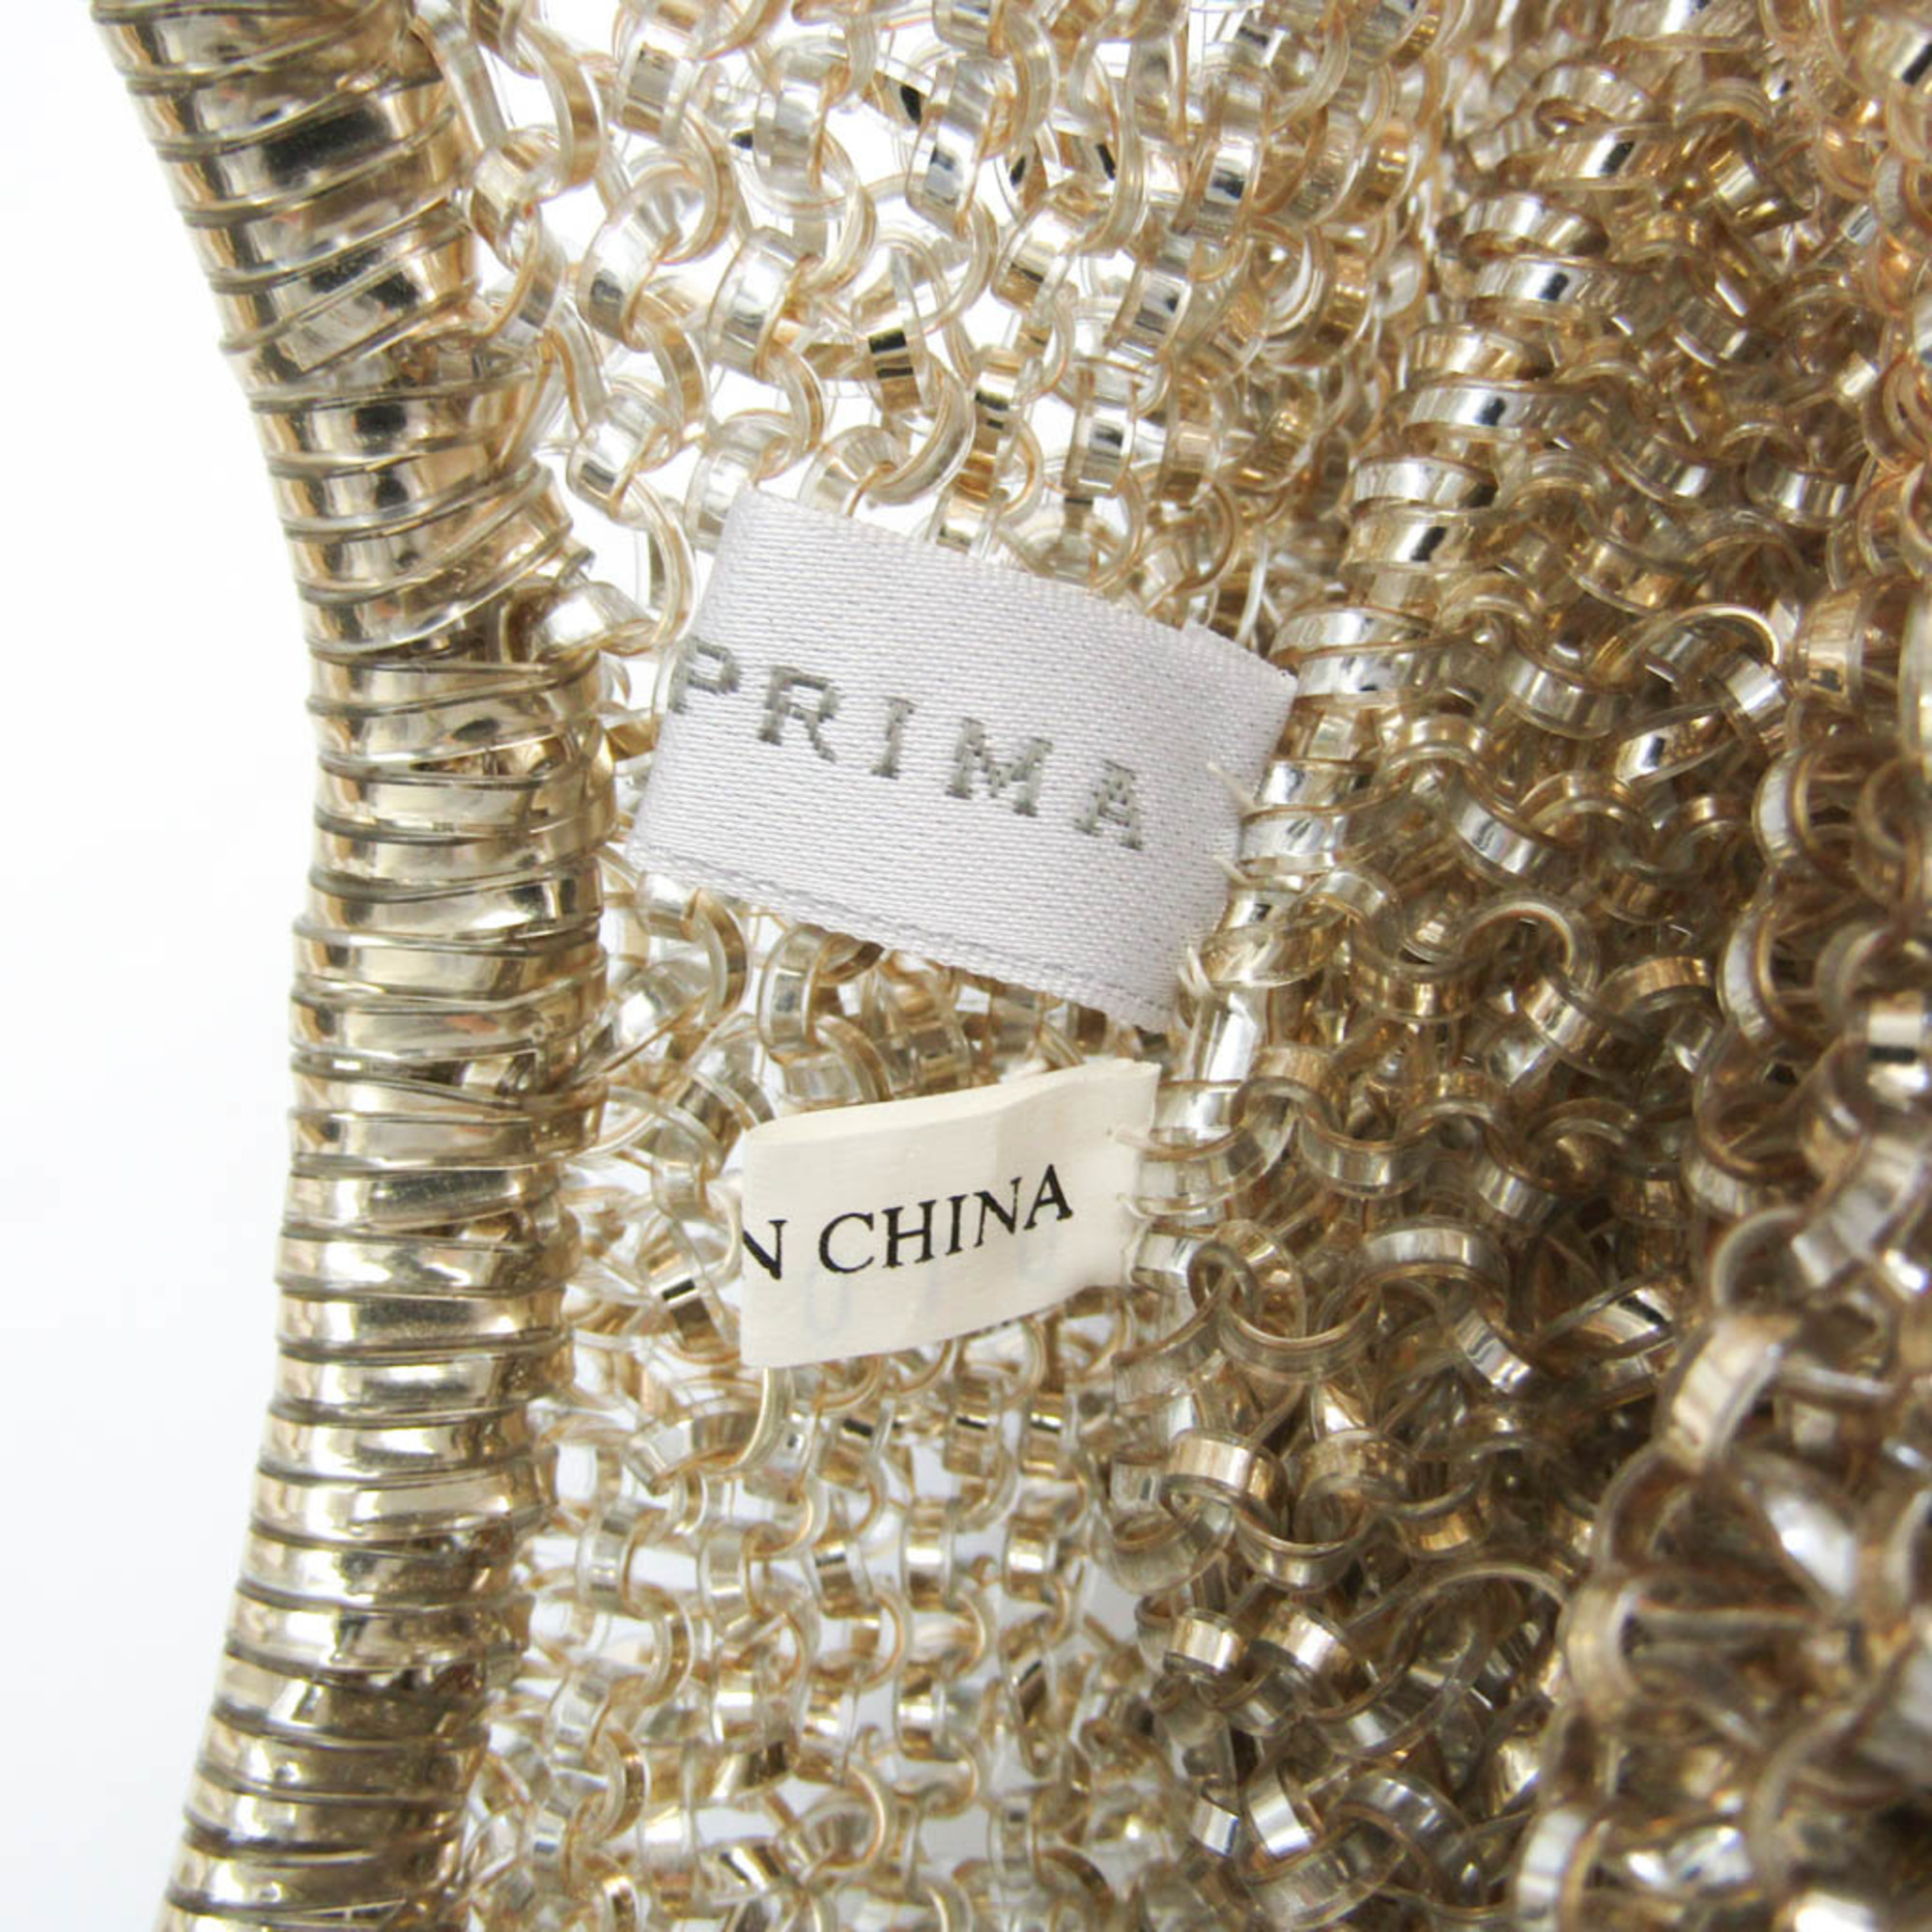 Anteprima Women's Wire Handbag Clear,Gold,Silver